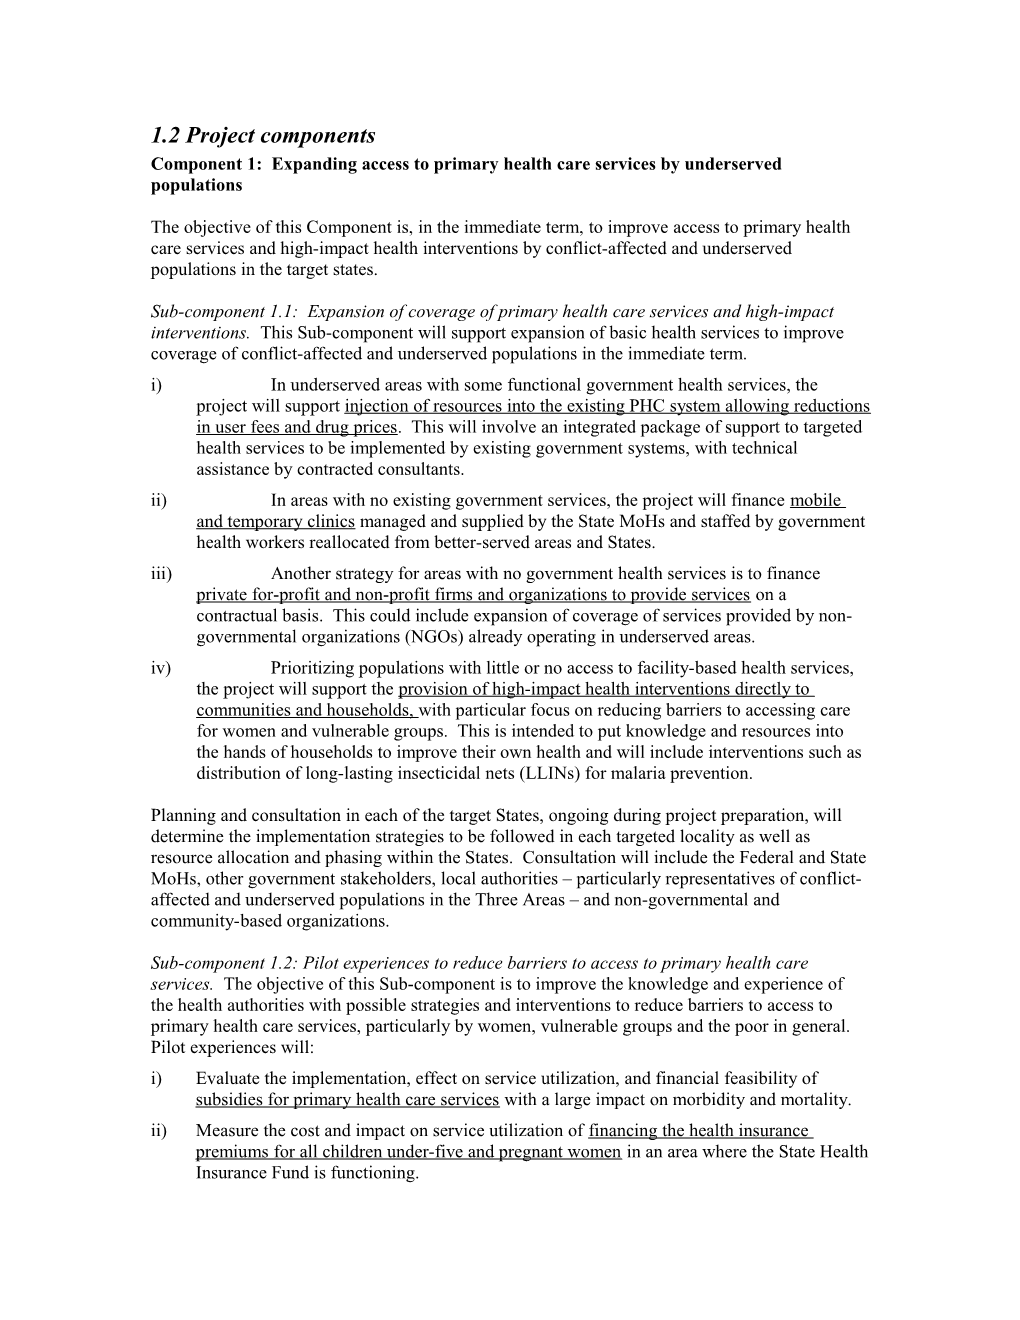 Environmental and Social Assessment Framework for the Decentralized Health System Development